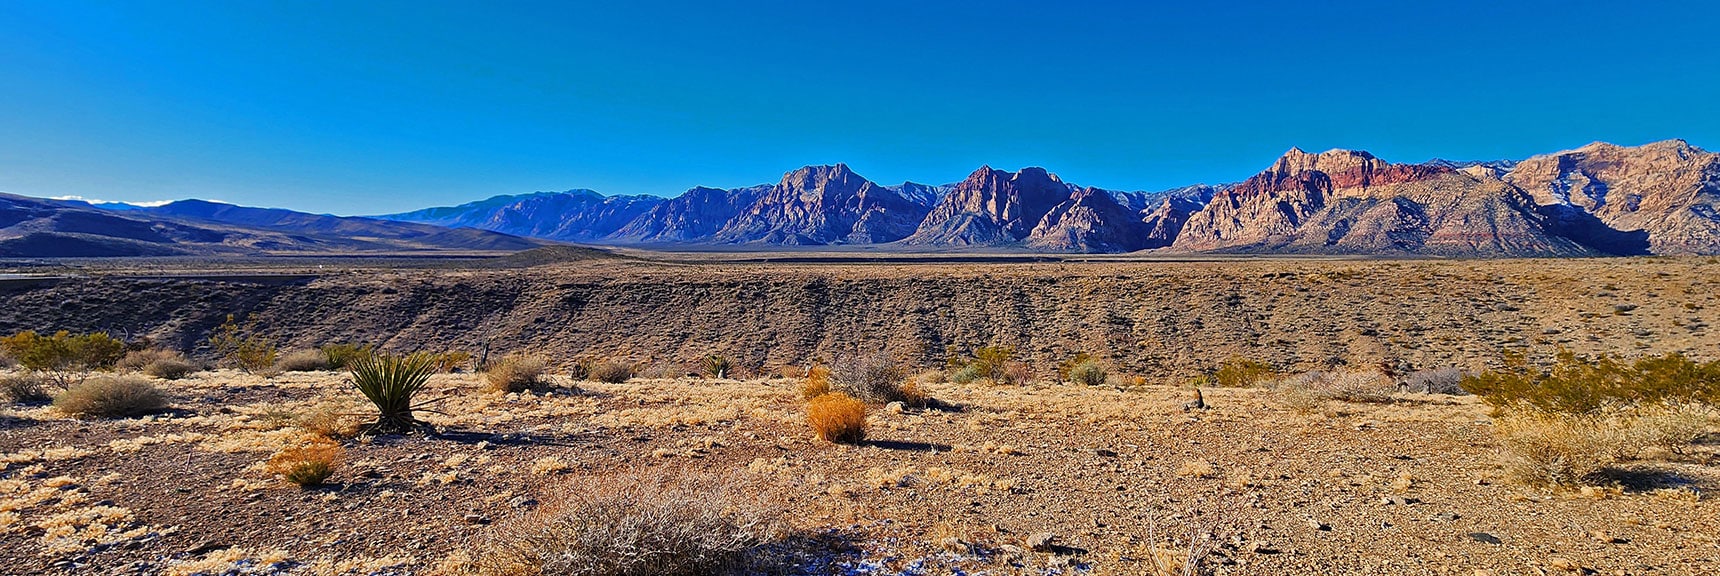 Southern Rainbow Mts. from Ridge Across Wash | 3 Basin Circuit | Calico Basin, Brownstone Basin, Red Rock Canyon, Nevada